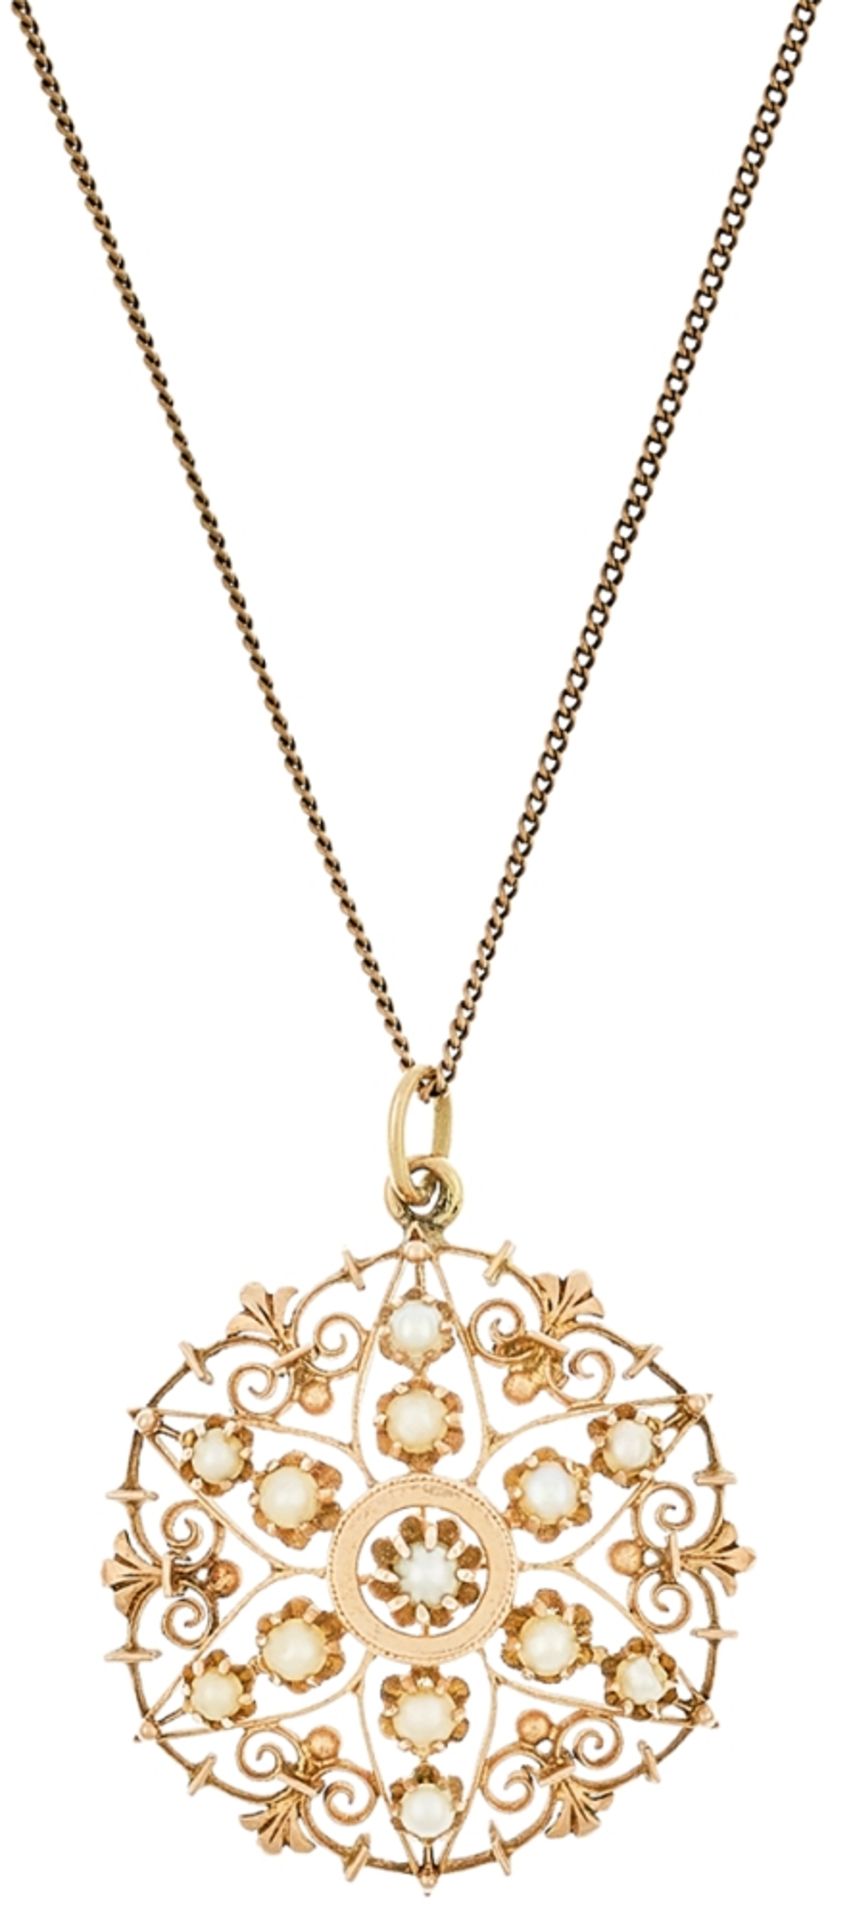 Biedermeier Perlen Anhänger mit Kette, 8 K Rosegold, 5,2g, Naturperlen sternenförmig geordnet, Durch